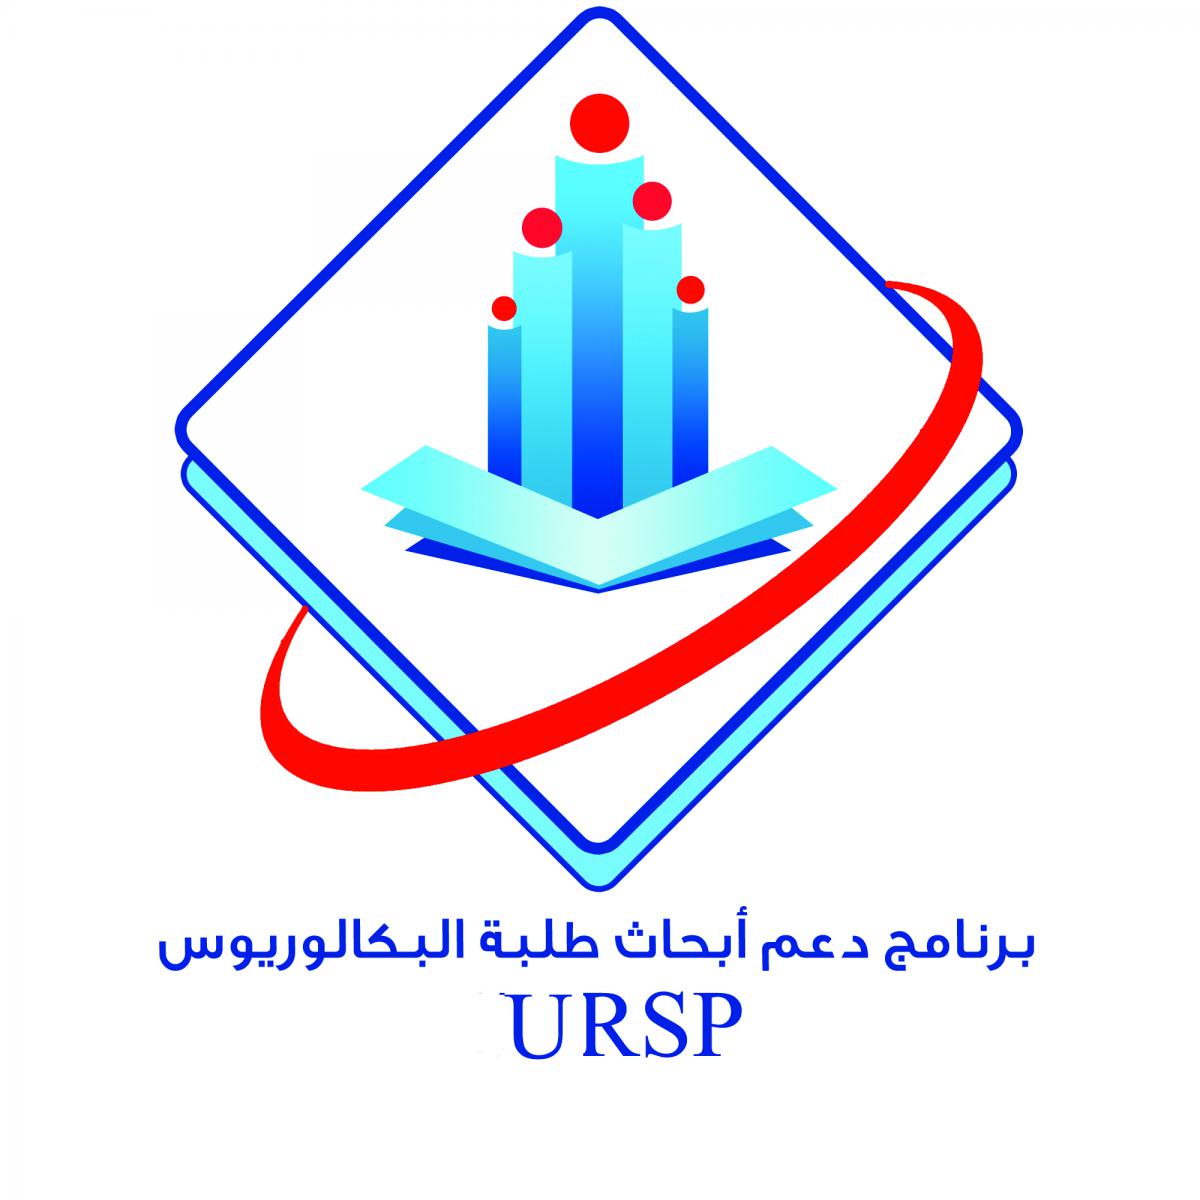 ursp logo